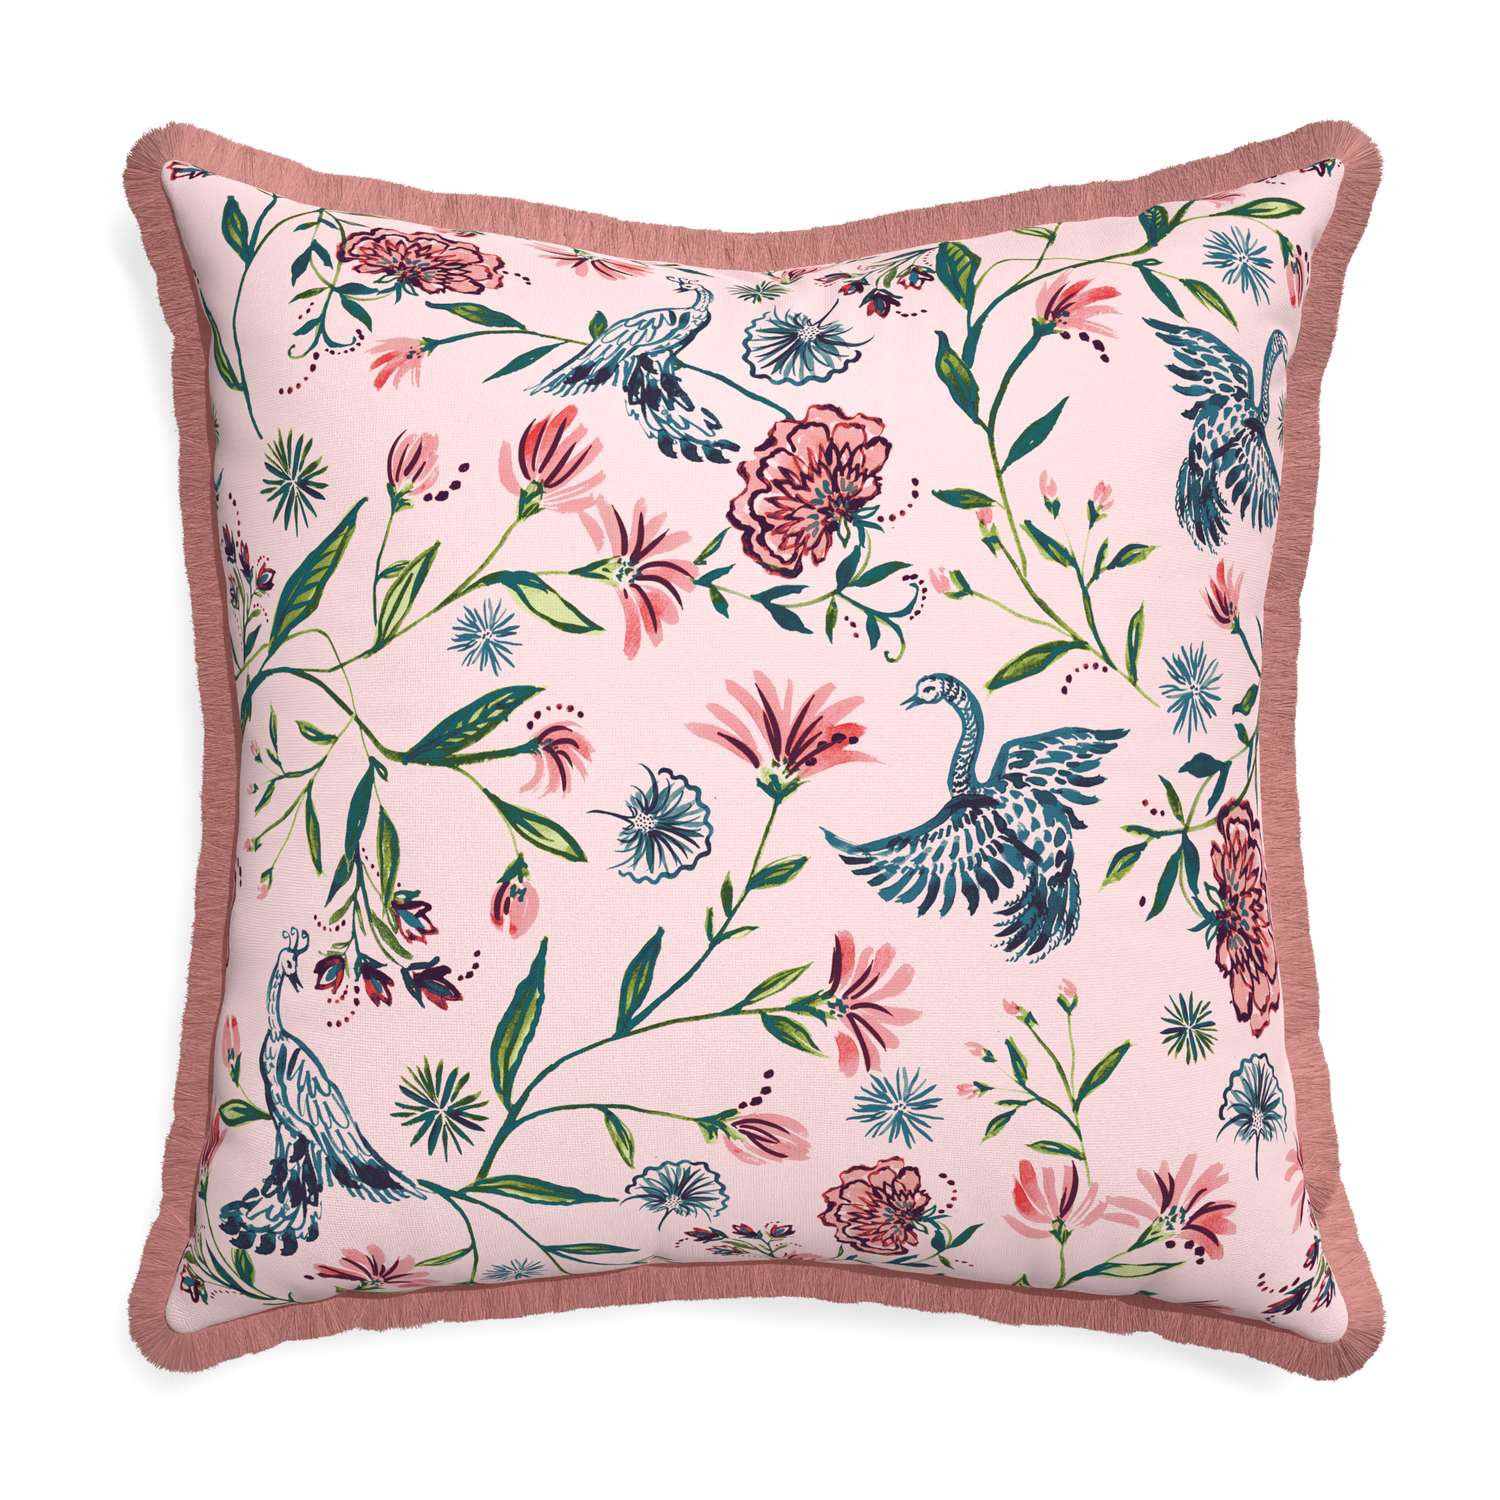 Euro-sham daphne rose custom pillow with d fringe on white background